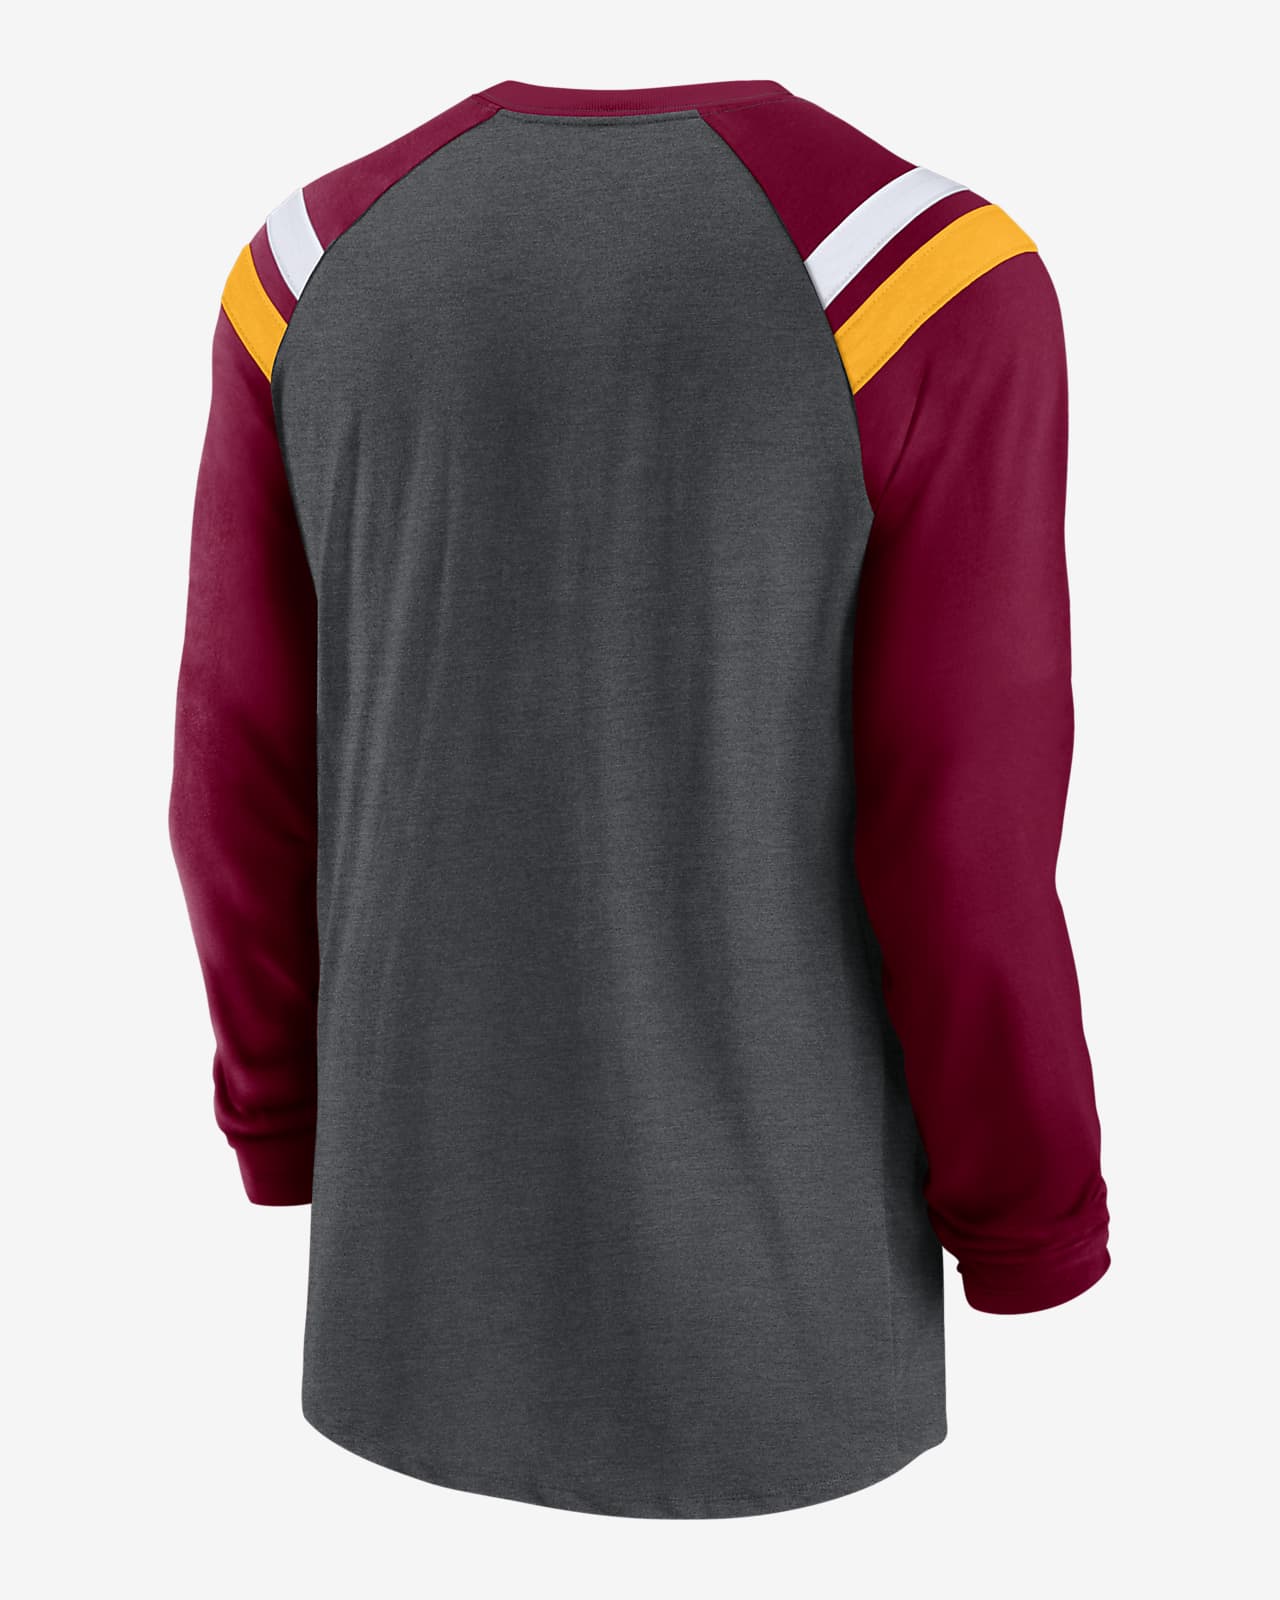 Nike Athletic Fashion (NFL Washington Commanders) Men's Long-Sleeve T-Shirt.